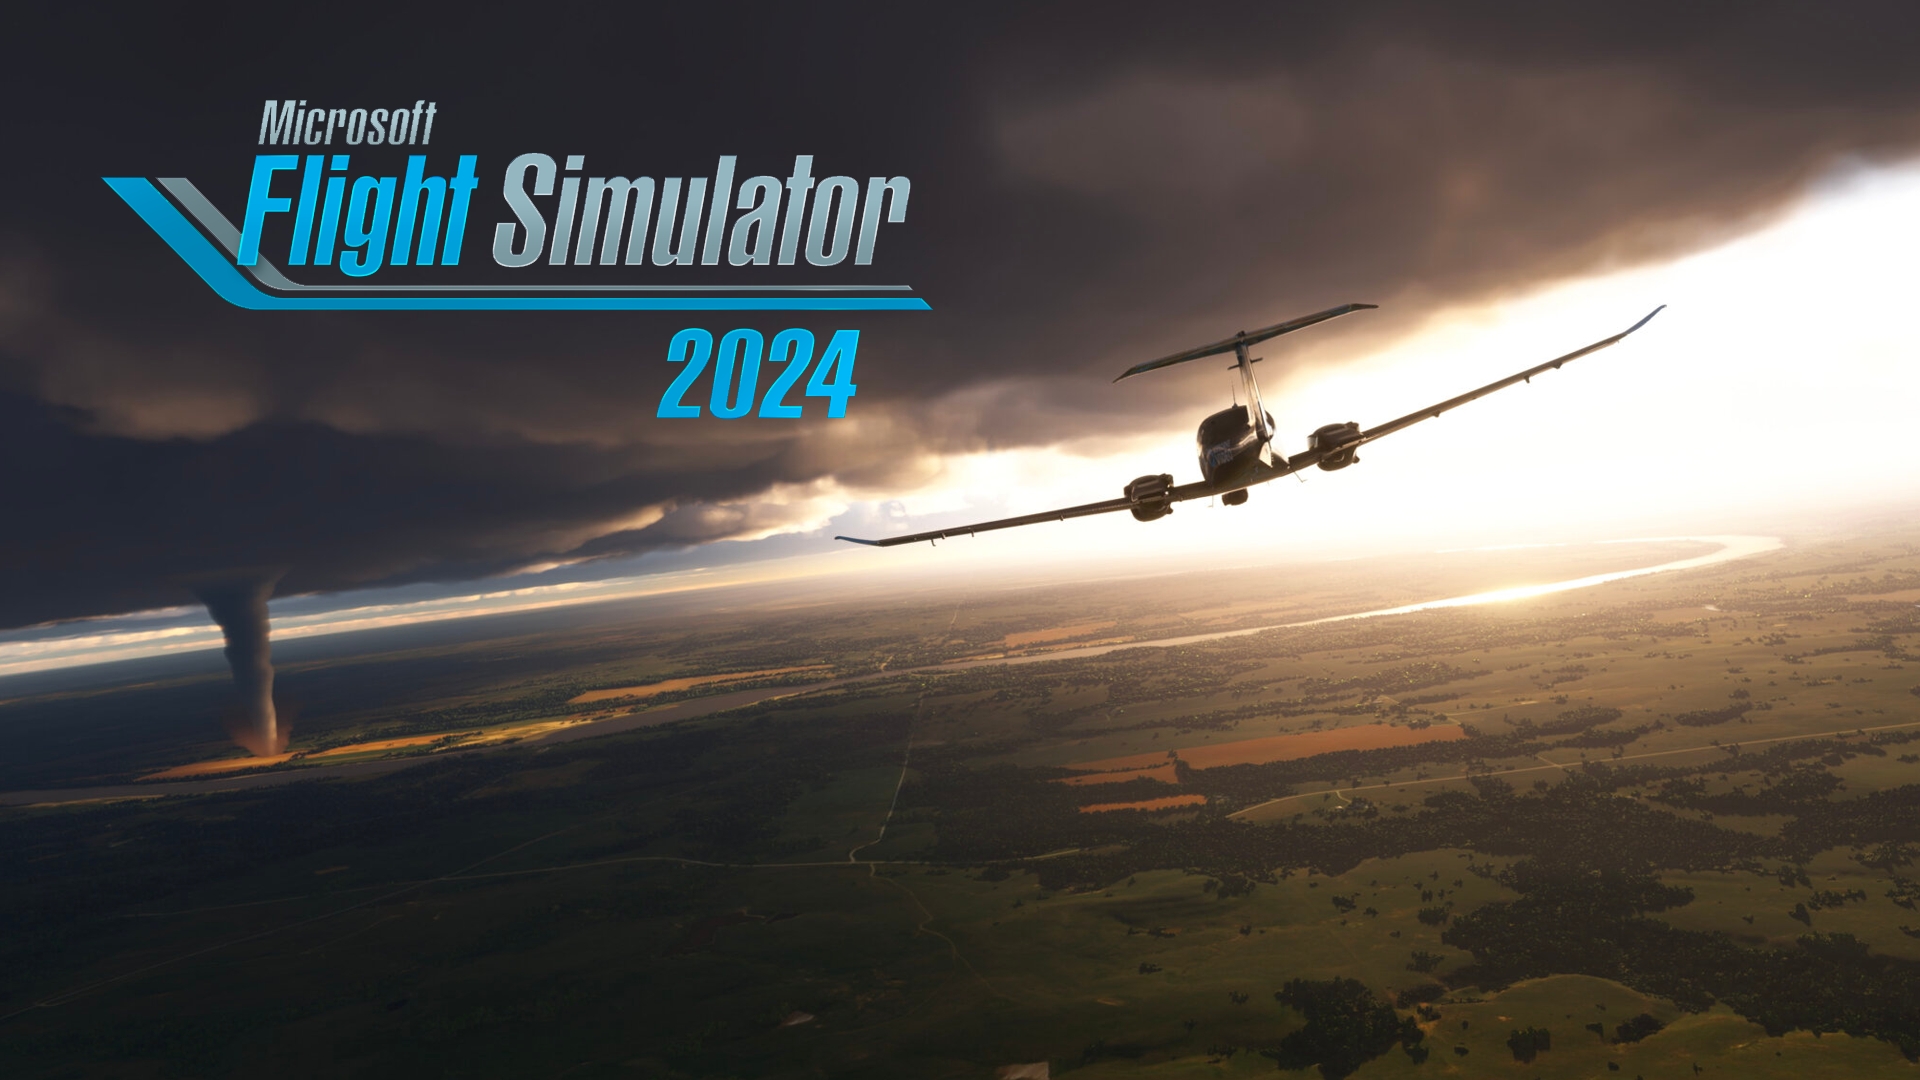 https://gaming-cdn.com/images/products/14345/orig/microsoft-flight-simulator-2024-pc-game-cover.jpg?v=1694002554